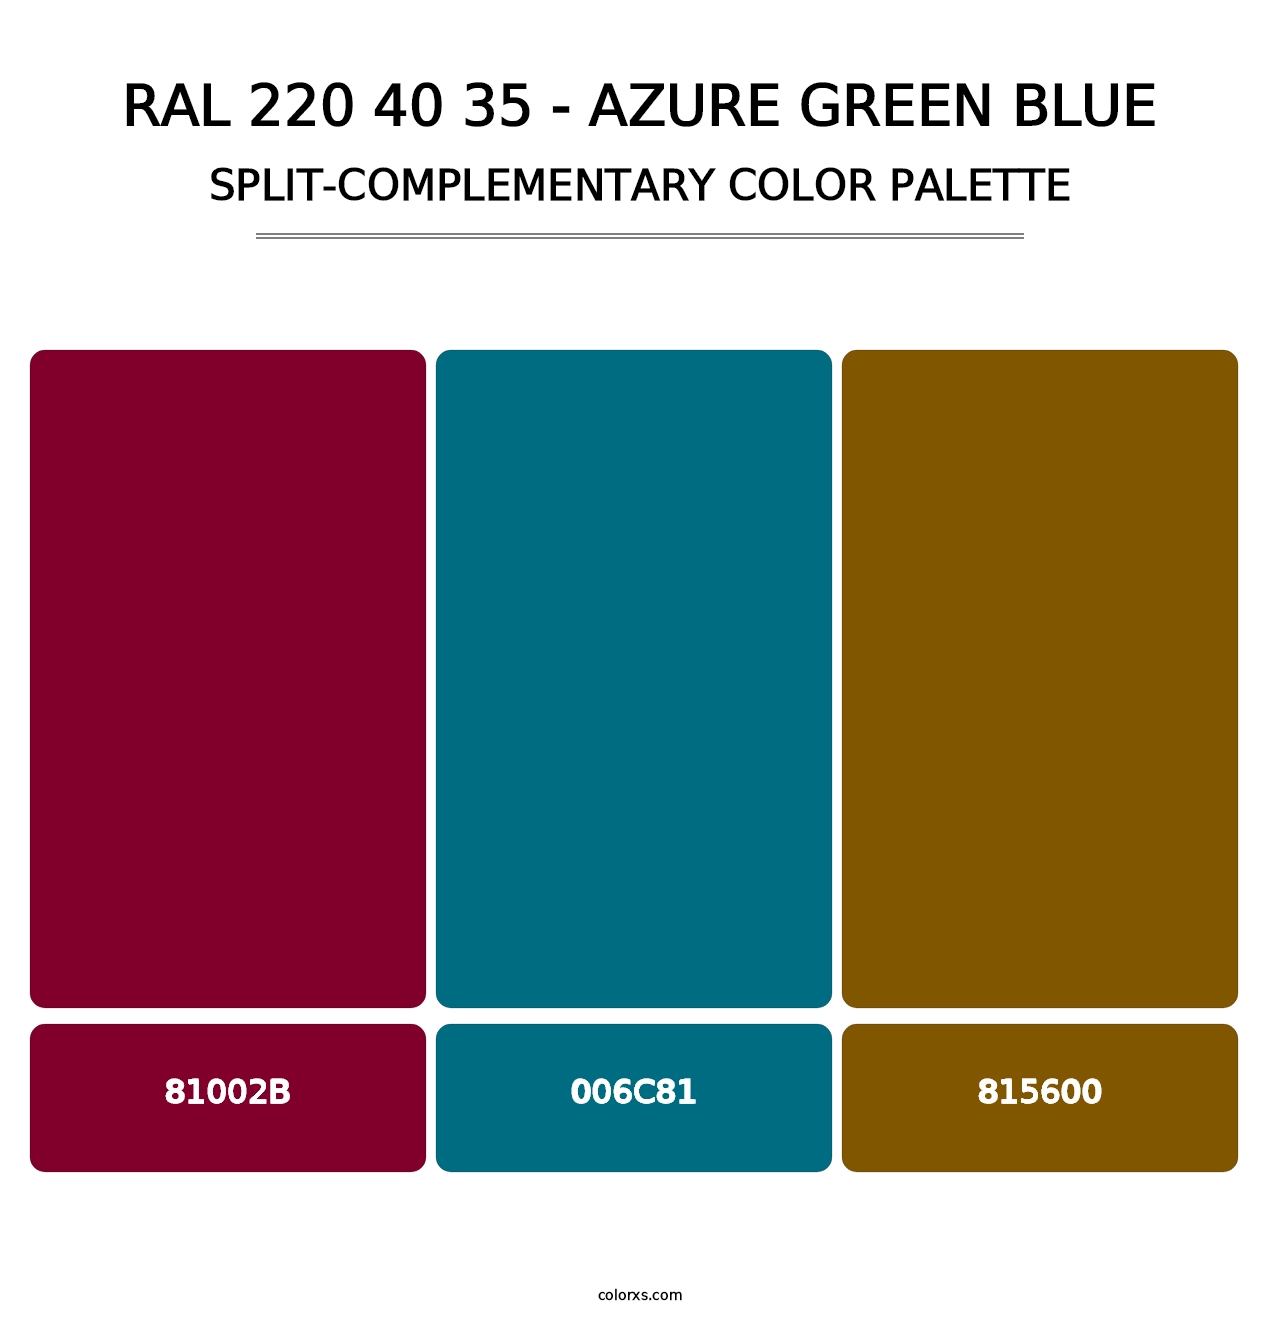 RAL 220 40 35 - Azure Green Blue - Split-Complementary Color Palette